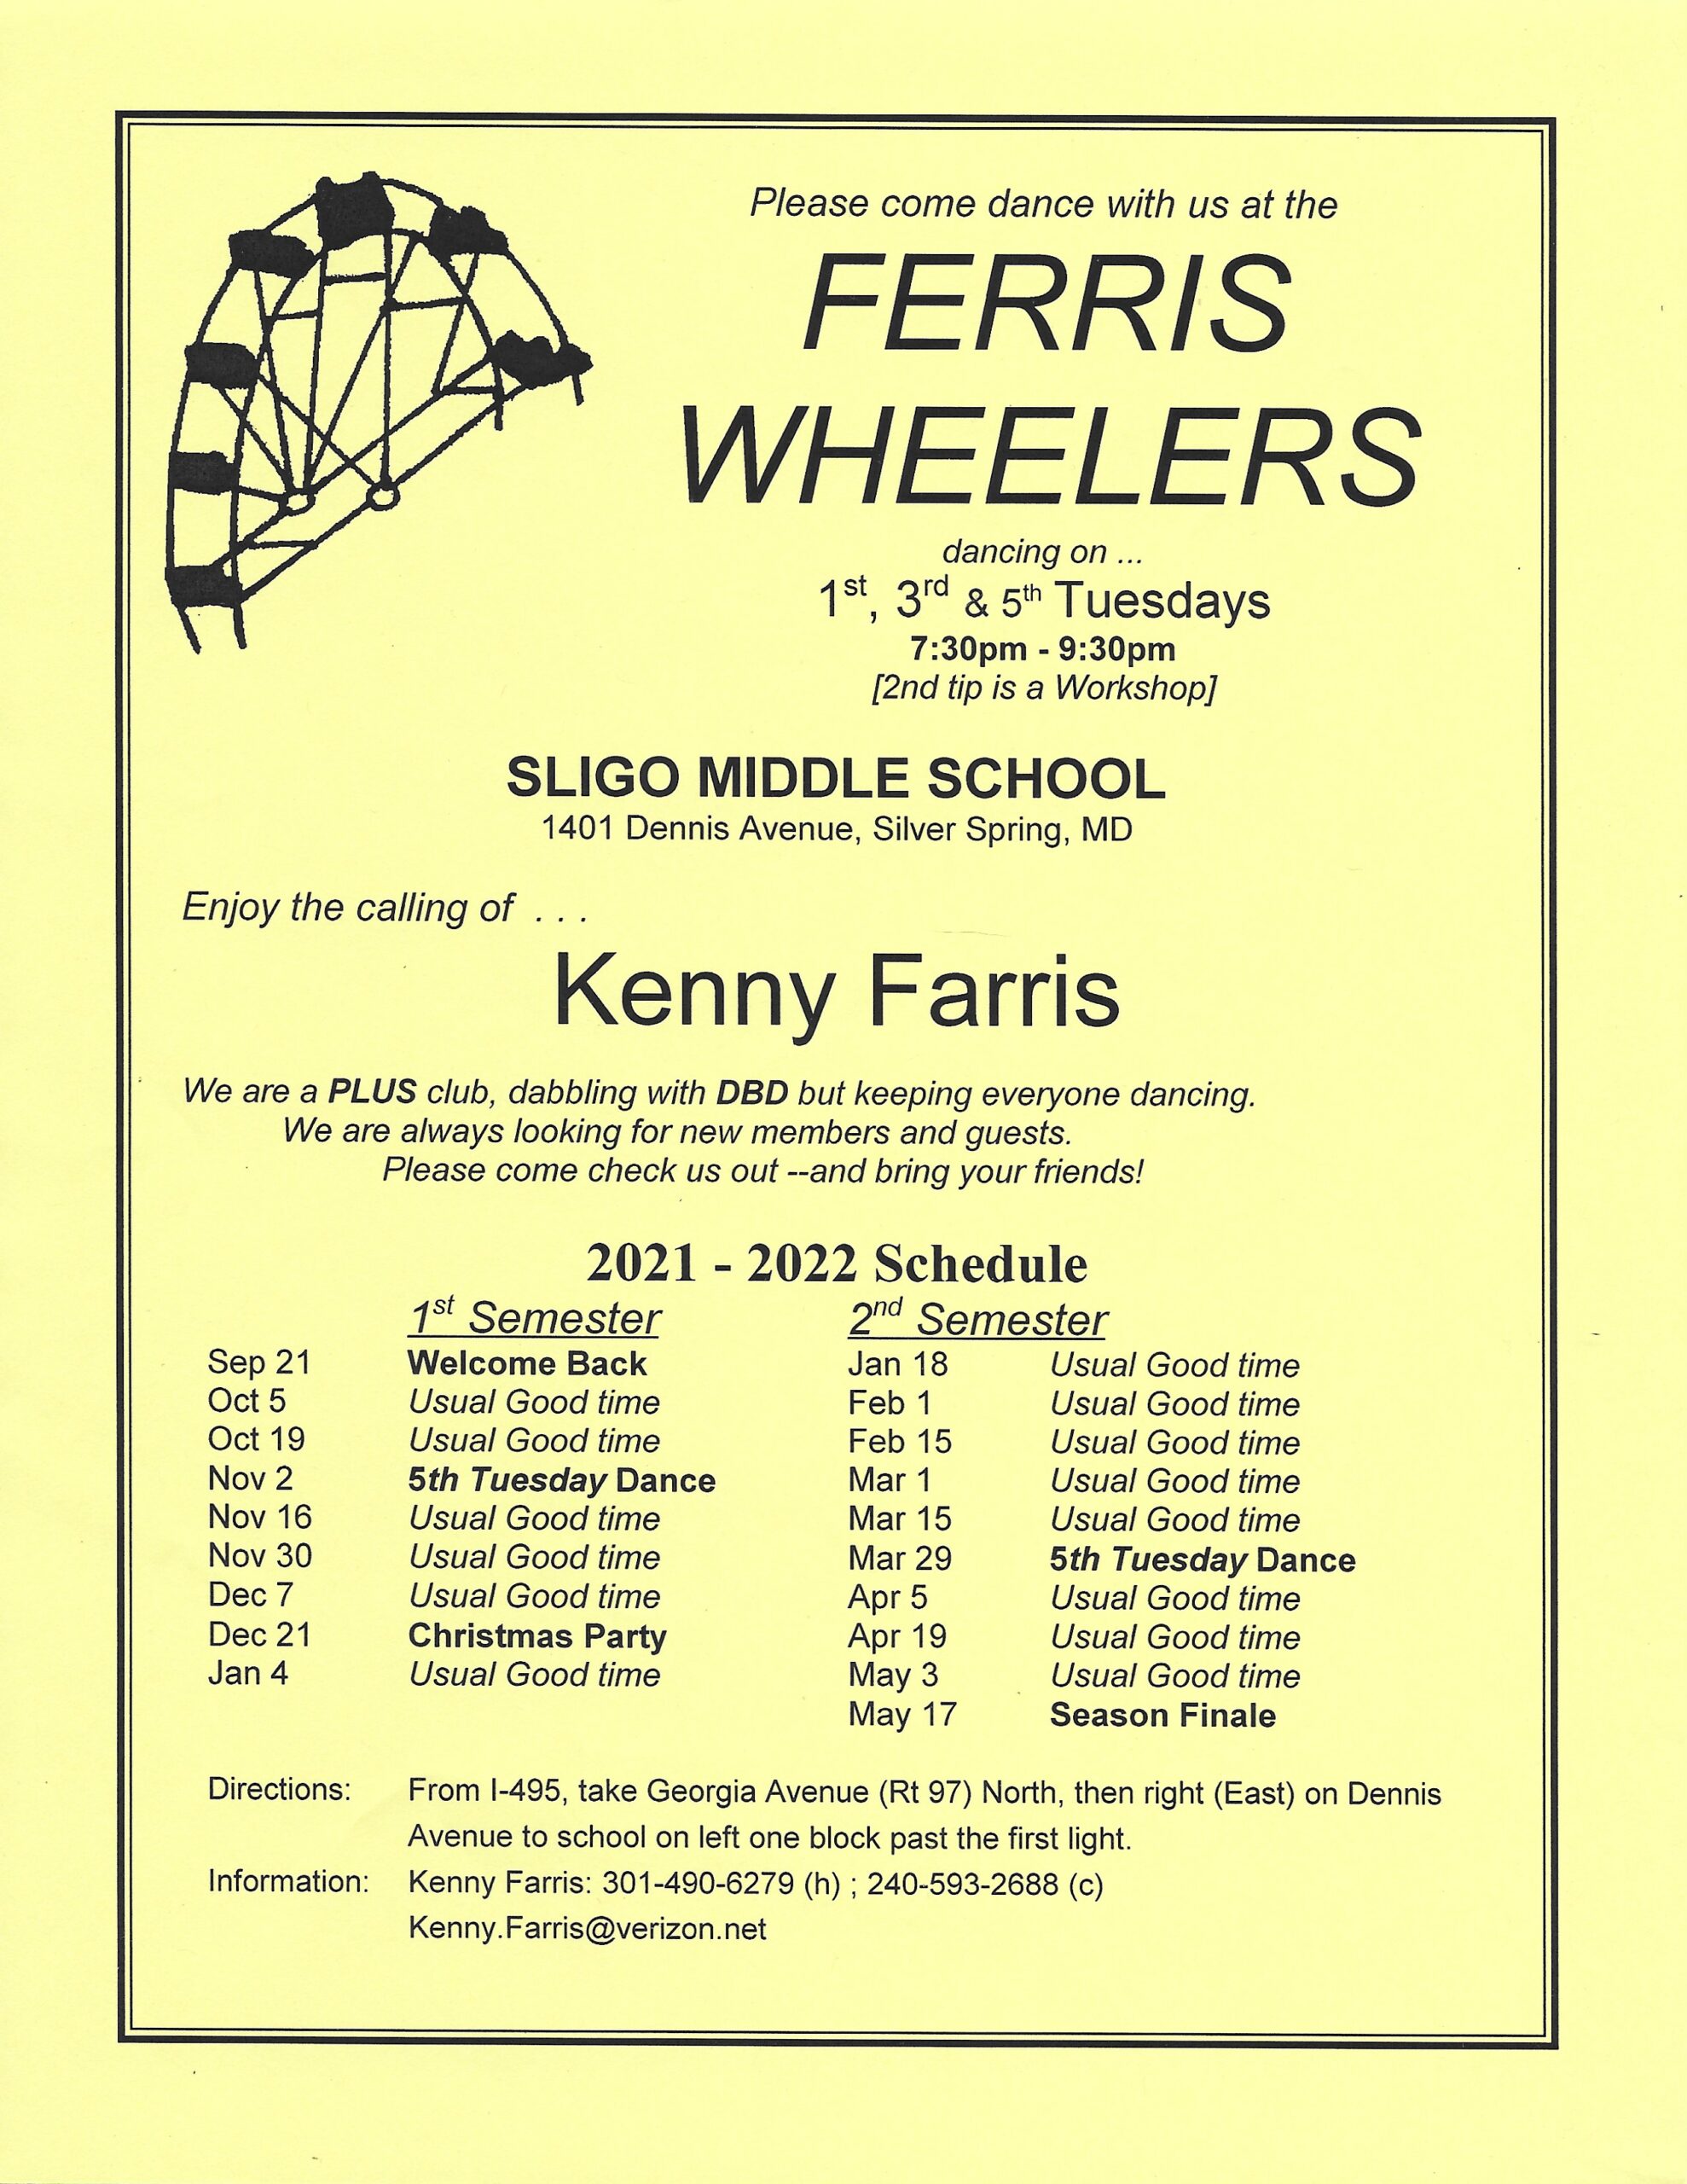 2021-2022 Ferris Wheelers